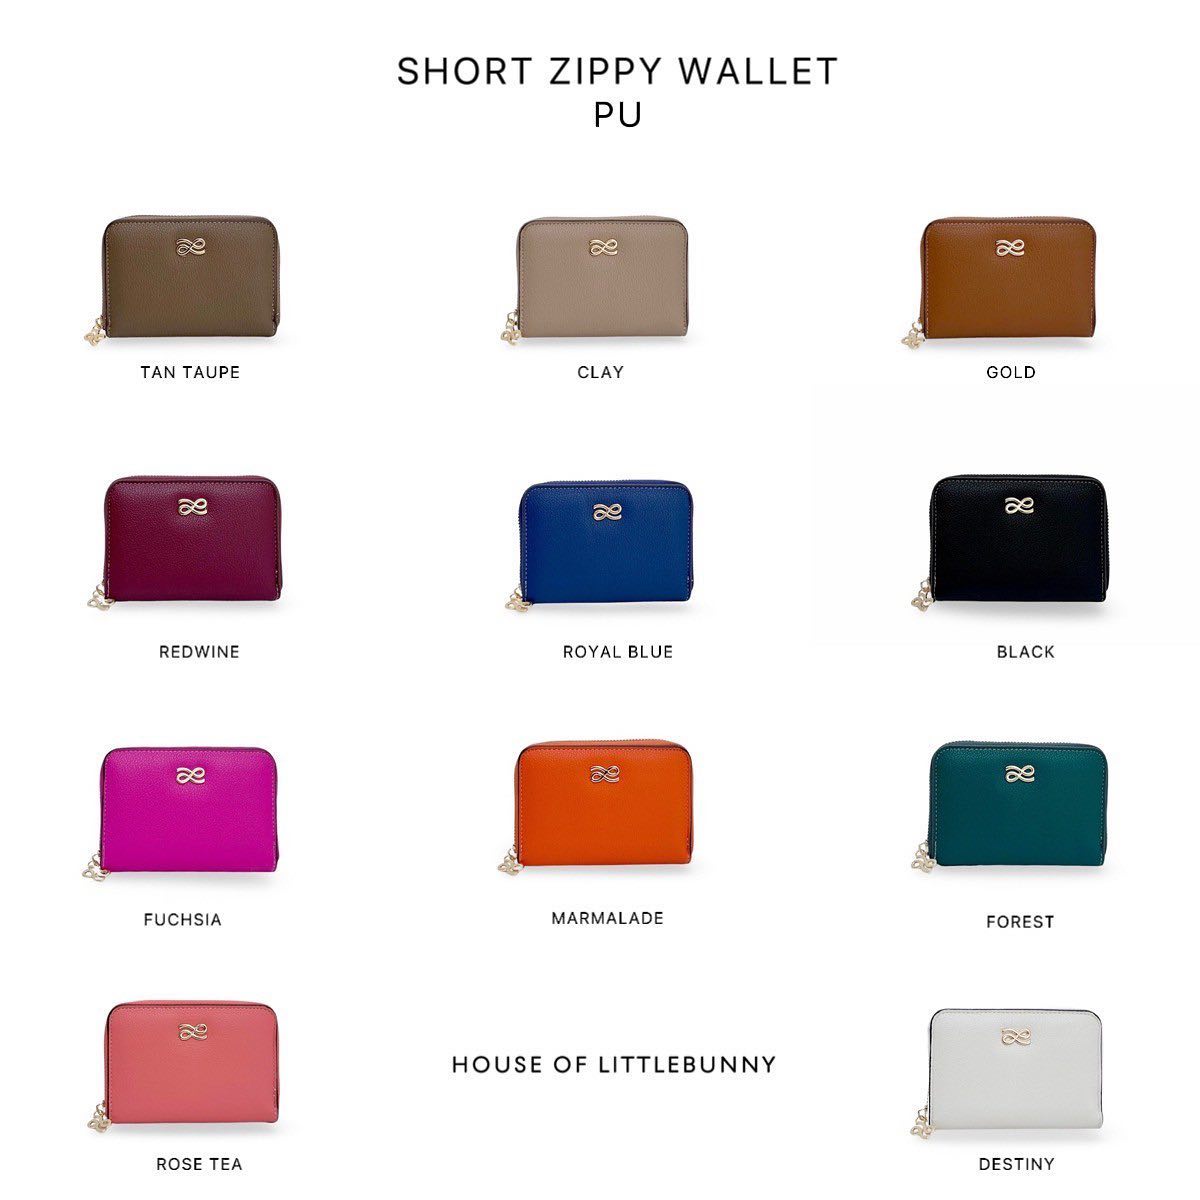 HOLB - Short Zippy Wallet PU Tan Taupe